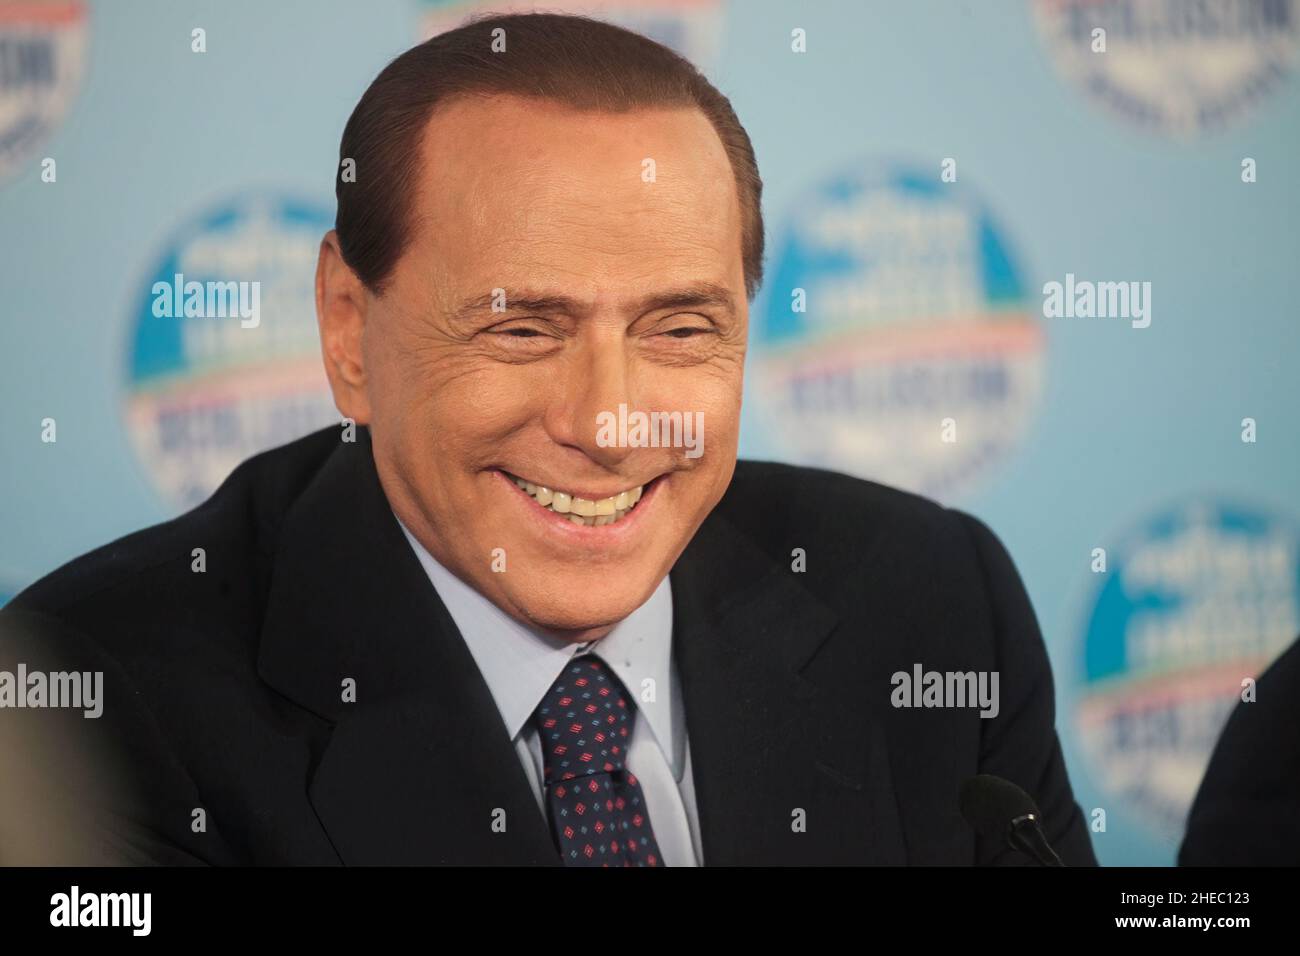 Silvio Berlusconi, dirigeant de Forza Italia, lors d'une conférence de presse électorale.Milan, Italie - Mars 2011 Banque D'Images